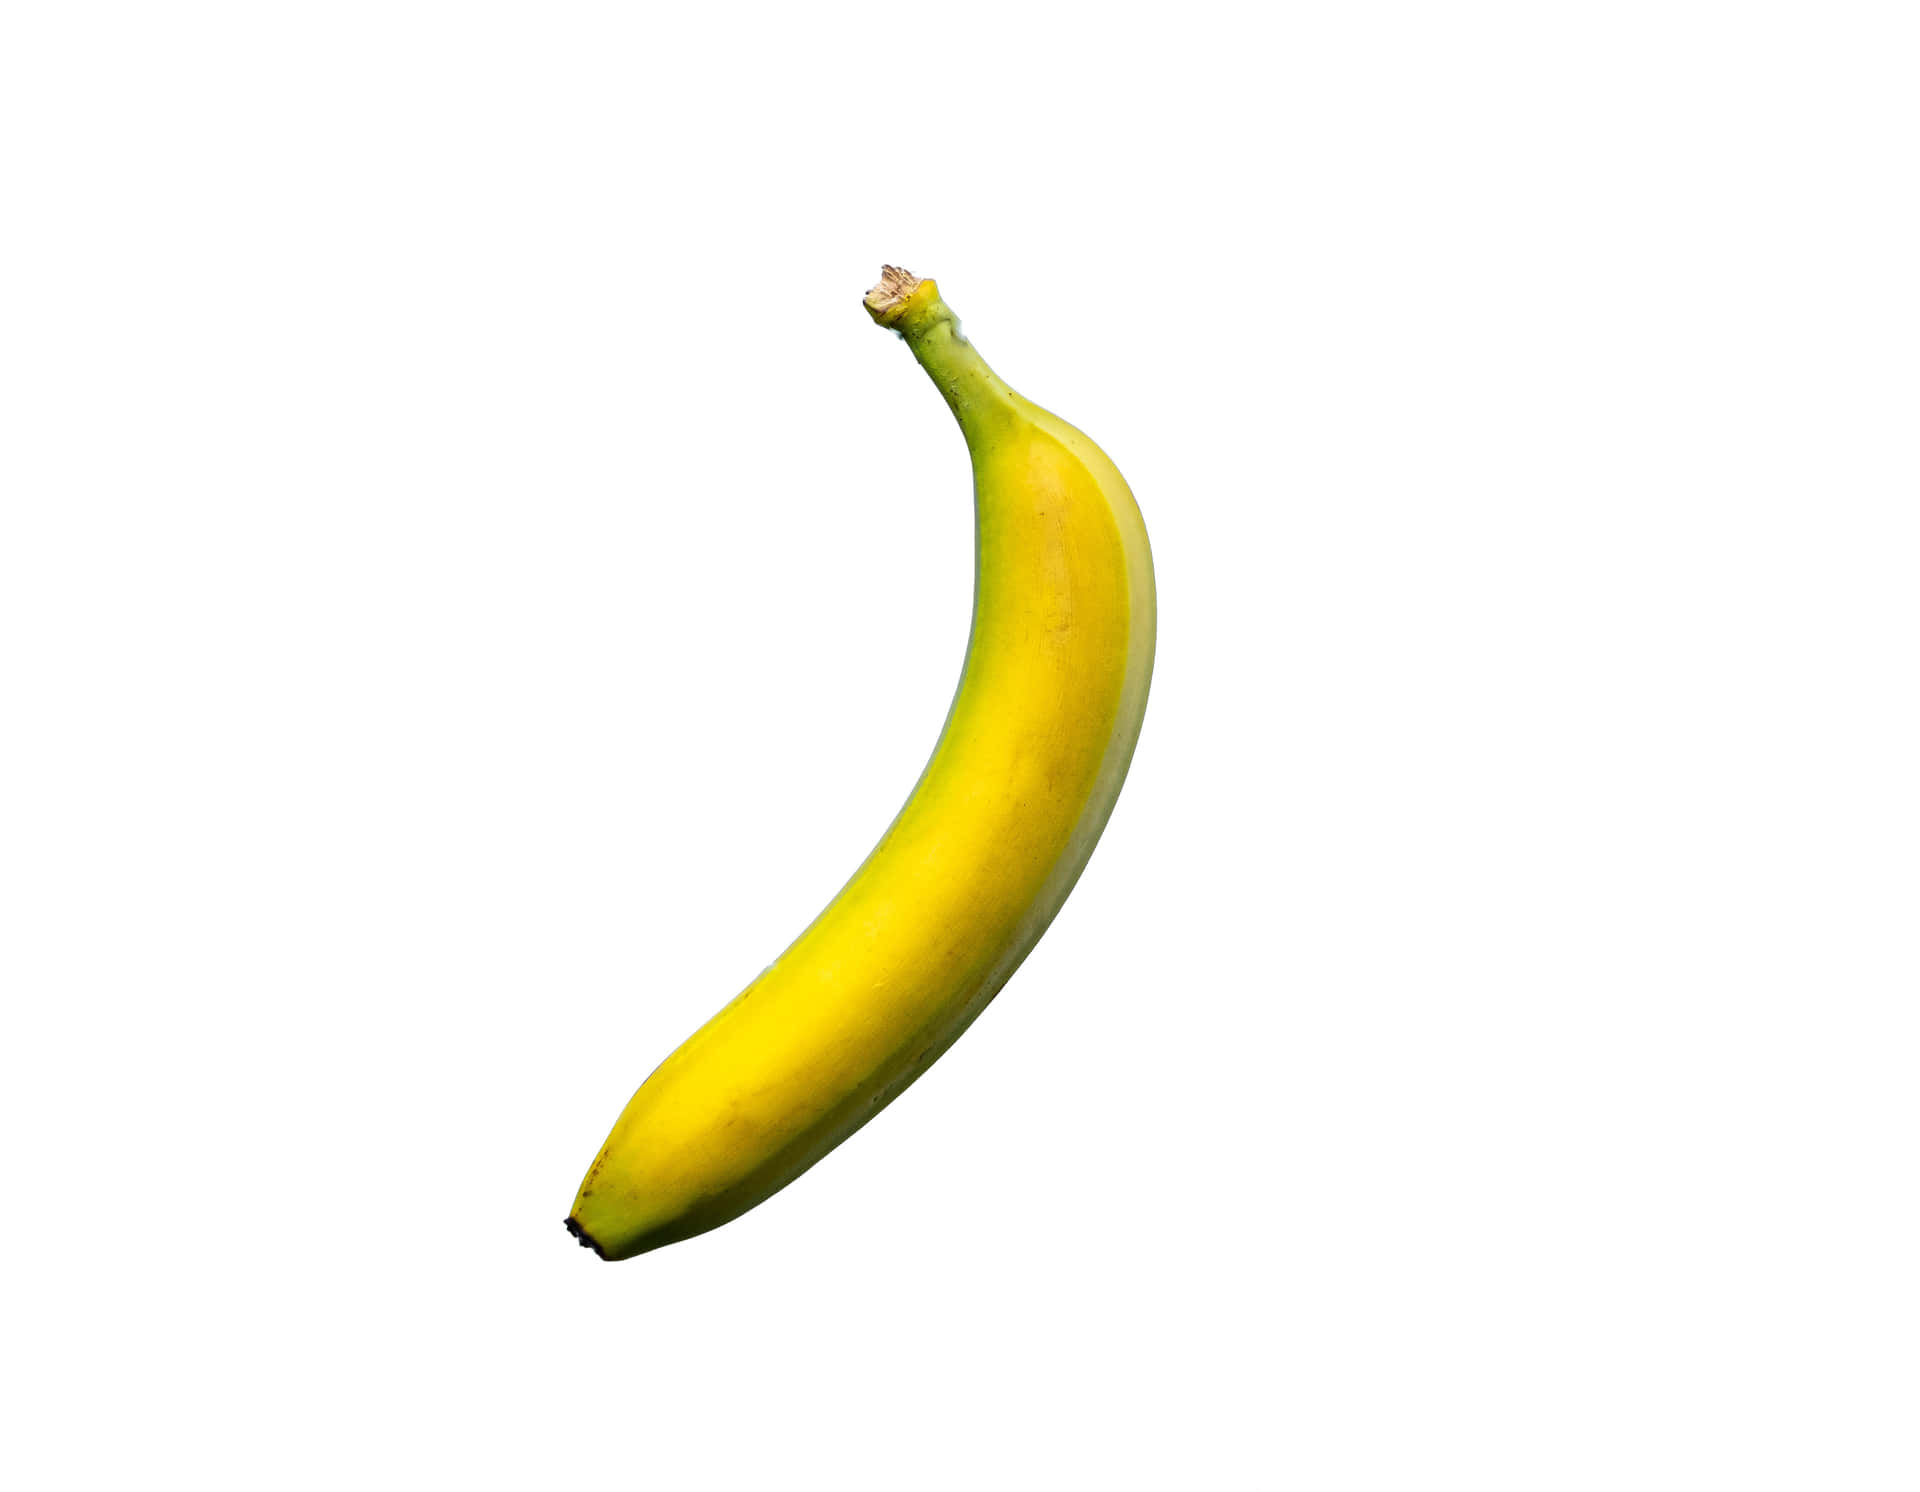 A fresh and ripe banana ready to be enjoyed